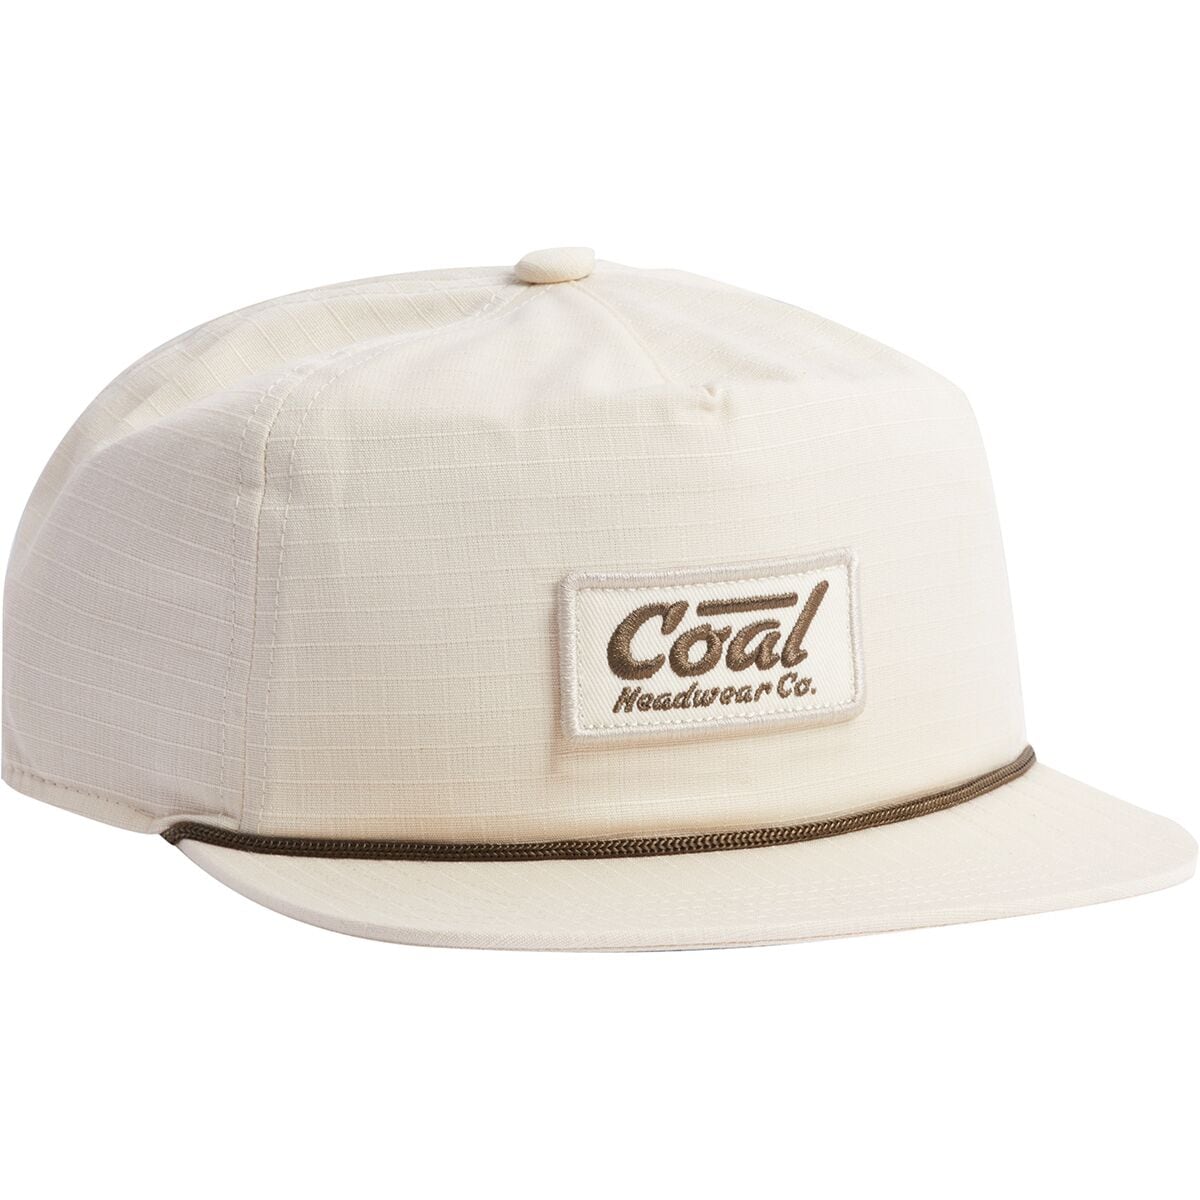 аналоговая шляпа coal headwear цвет fuchsia Атлас шляпа Coal Headwear, хаки